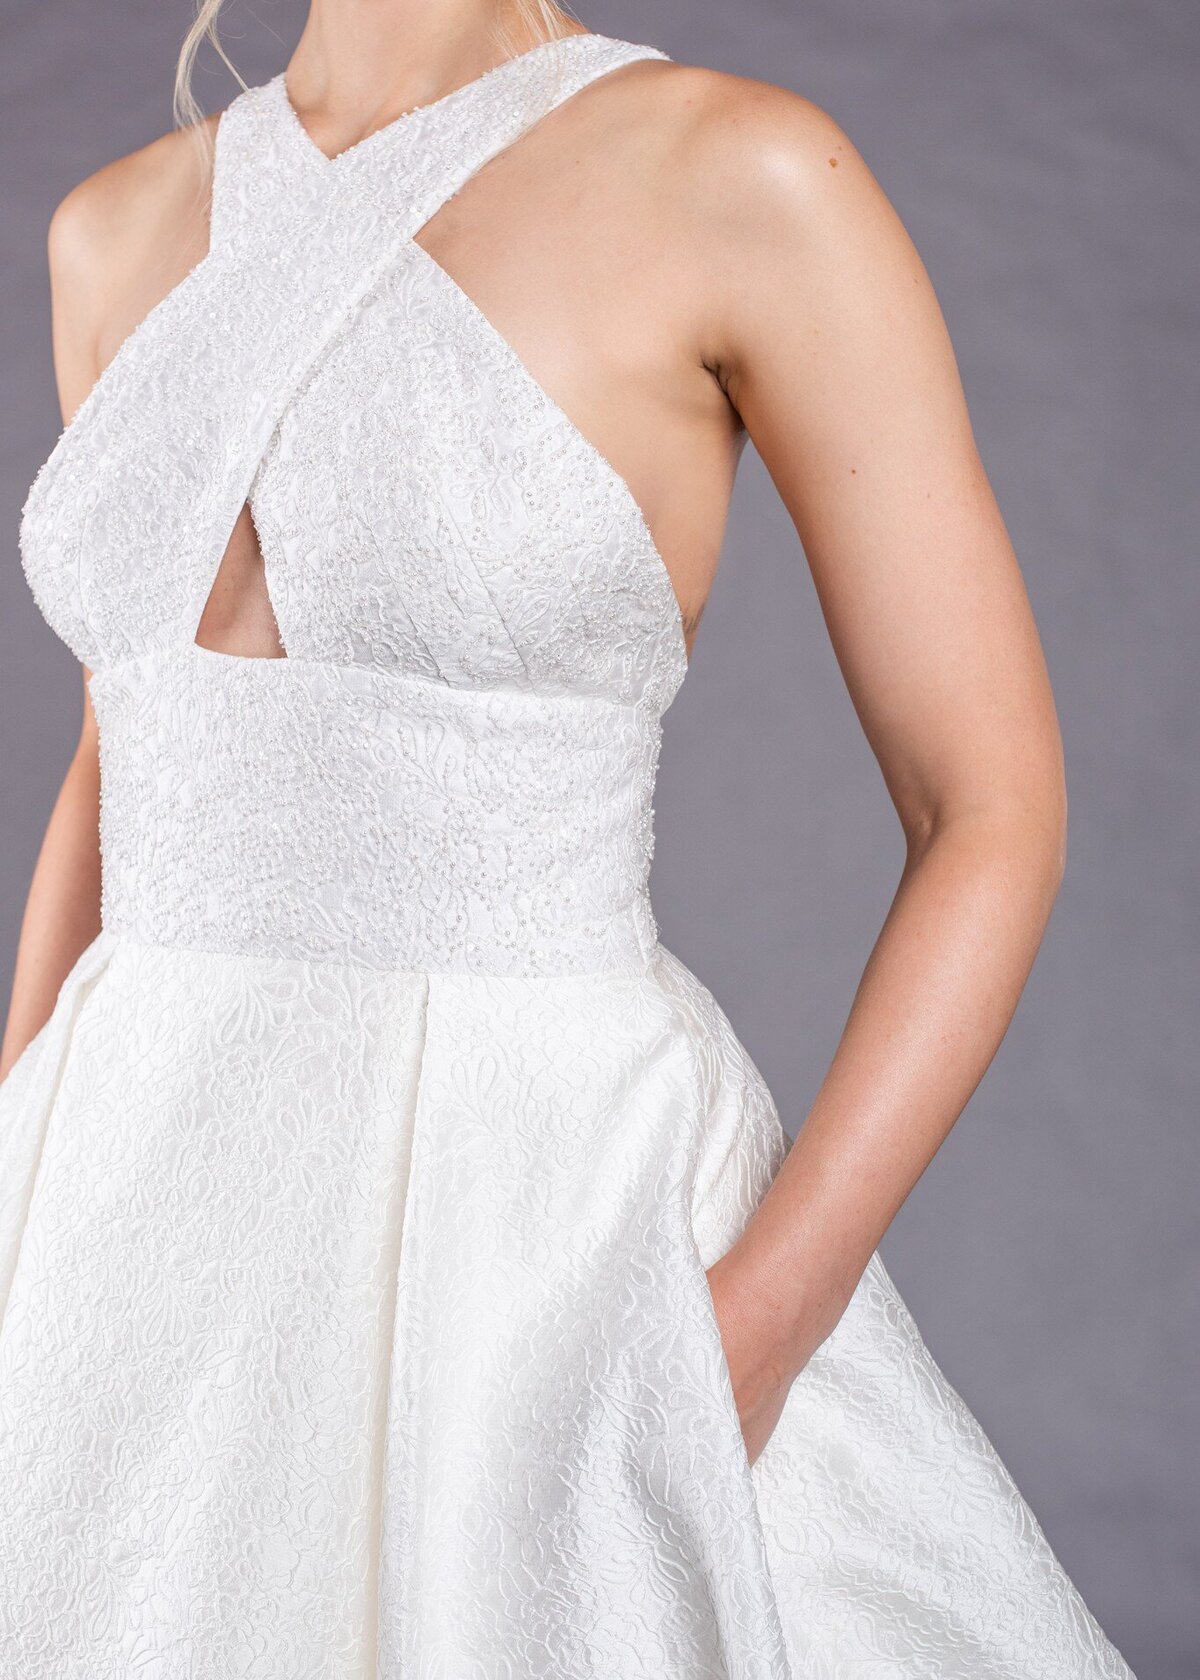 joan-textured-wedding-dress-with-pockets-edith-elan